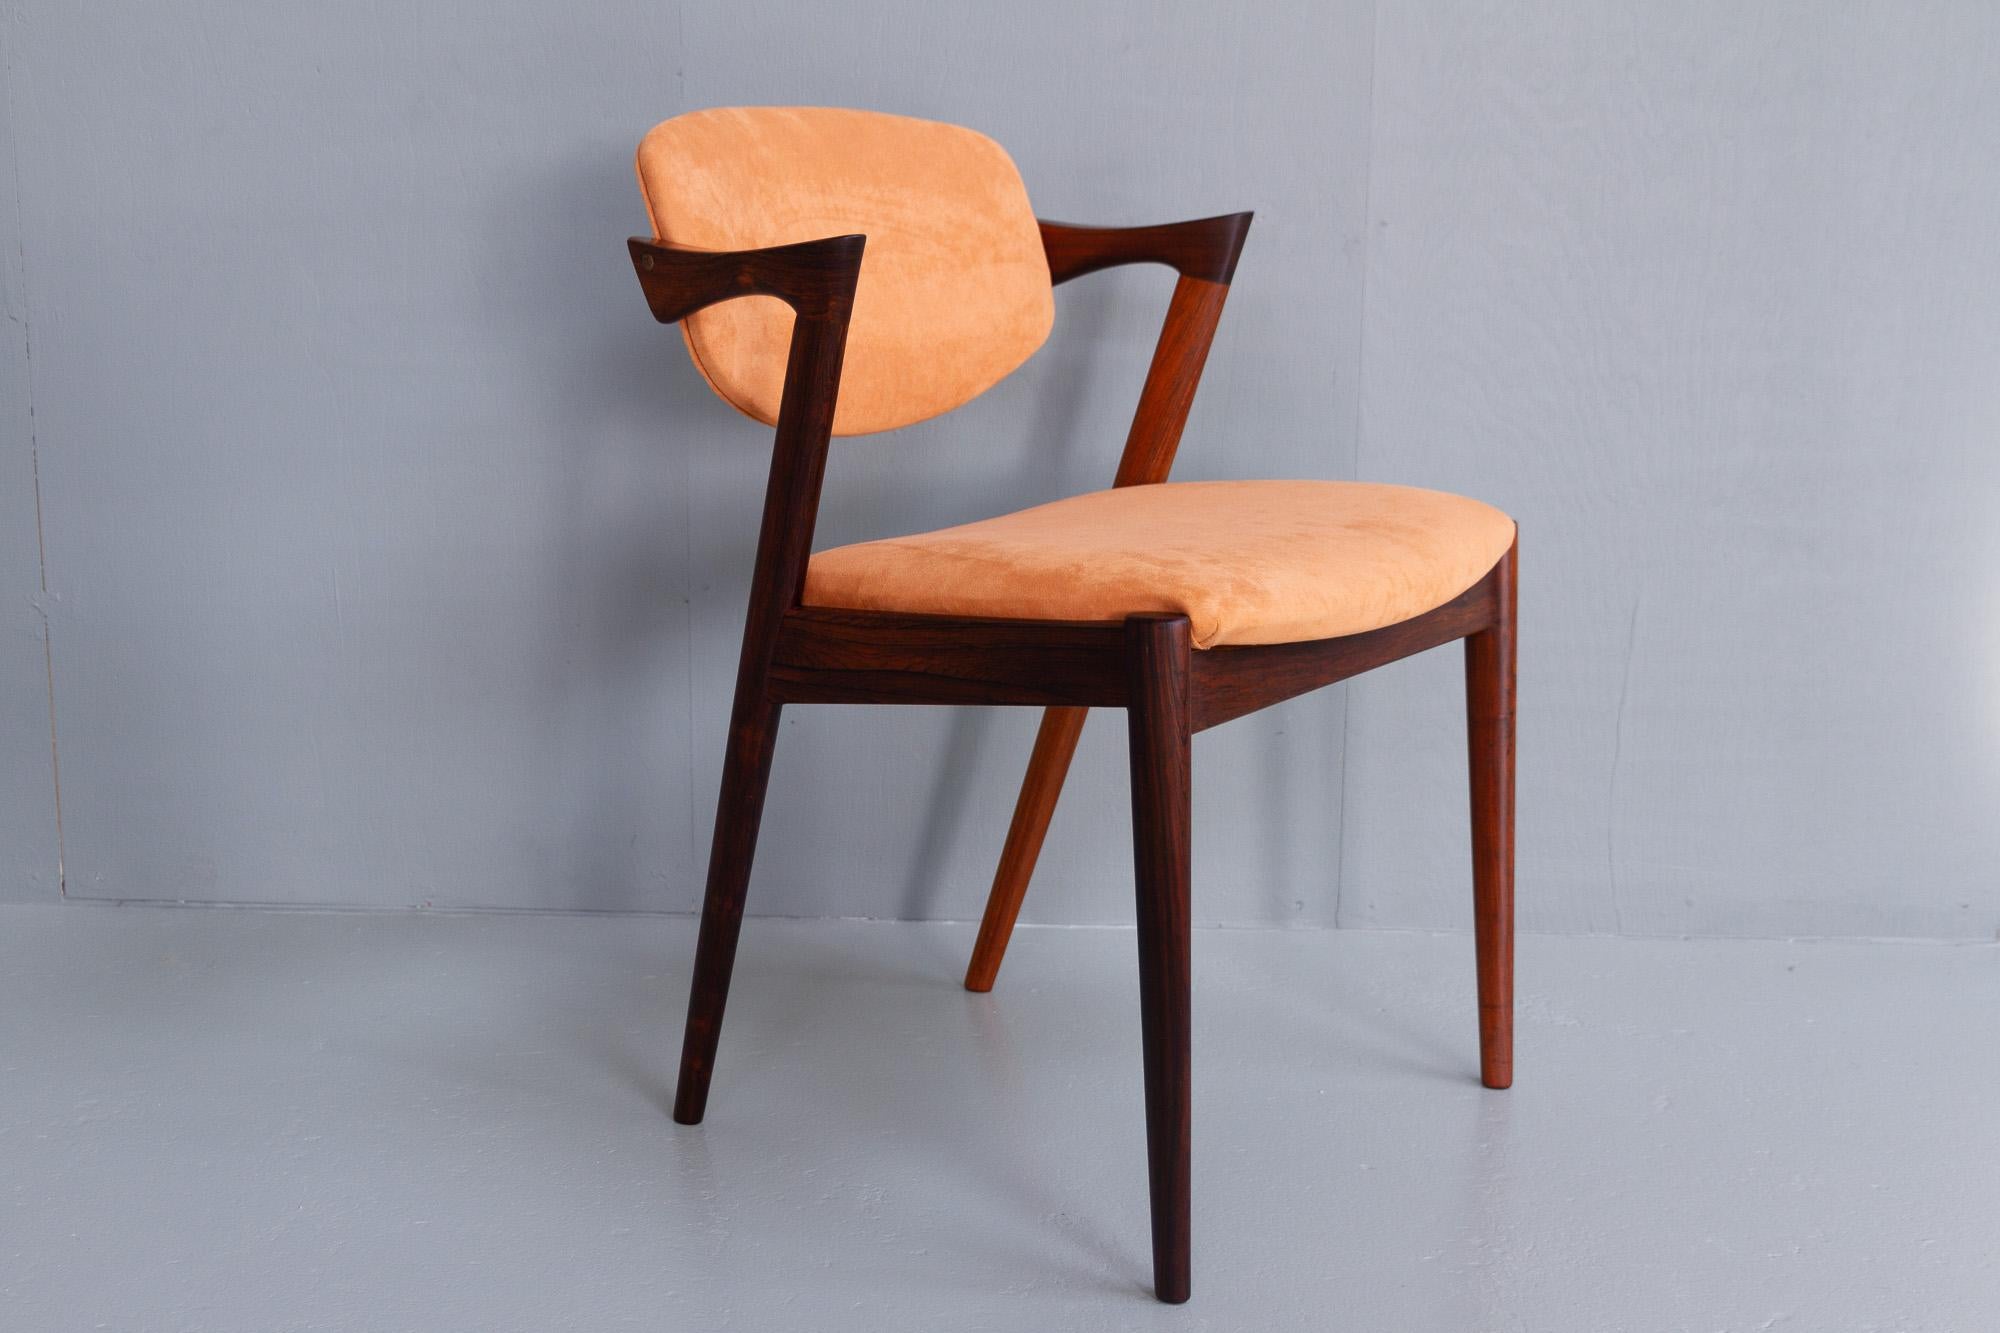 Vintage Danish Modern Rosewood chair Model 42 by Kai Kristiansen, 1960s.
Mid-Century Modern armchair designed by Danish architect Kai Kristiansen in the 1950s and manufactured by Schou Andersen Møbelfabrik, Denmark.
Very comfortable, elegant and